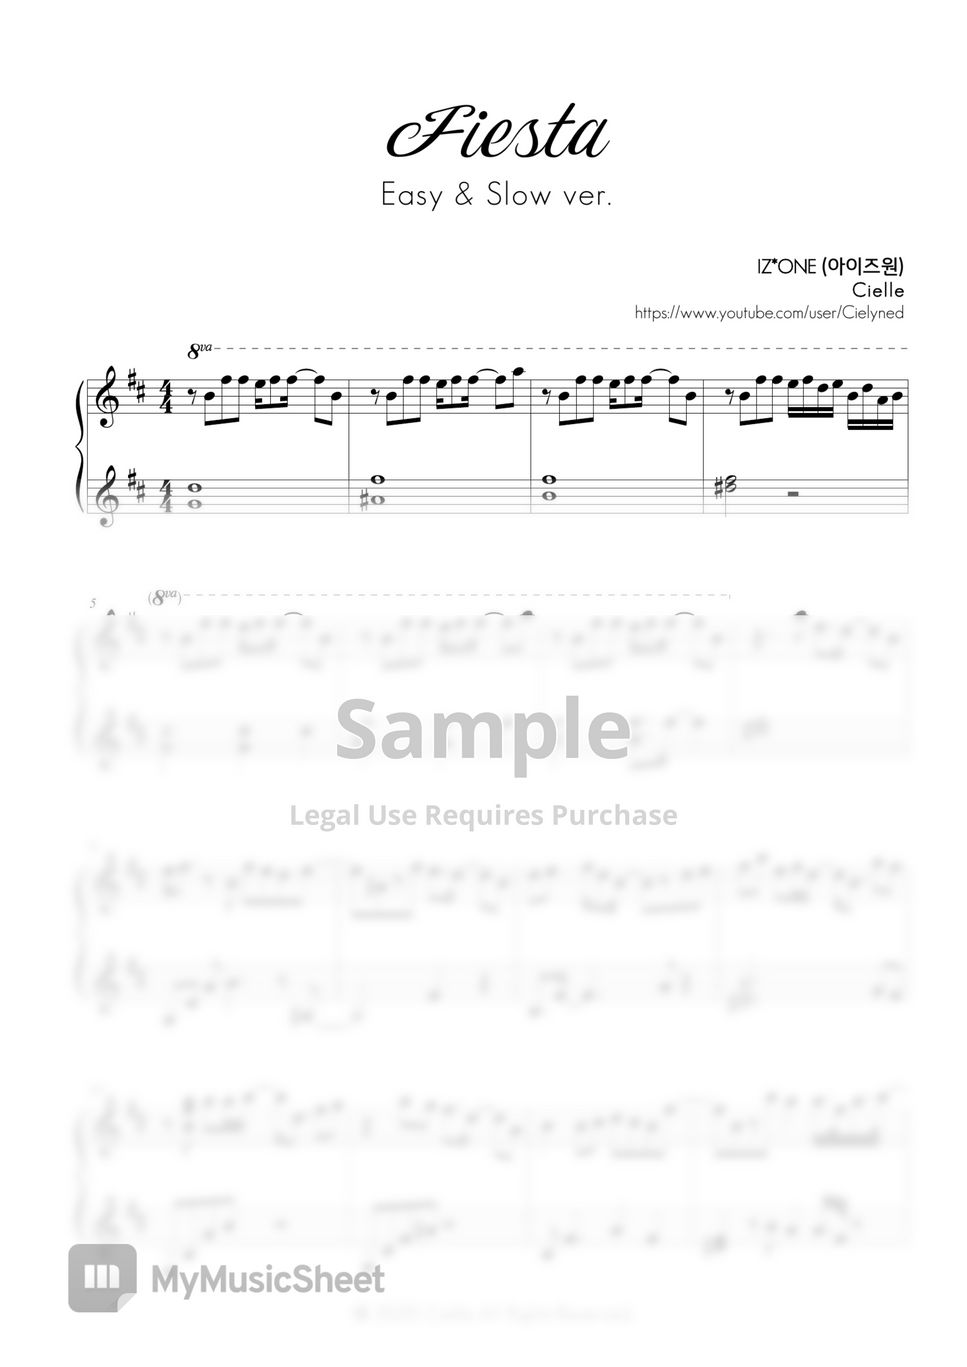 IZ*ONE - FIESTA (Easy&Slow Piano ver.) by Cielle